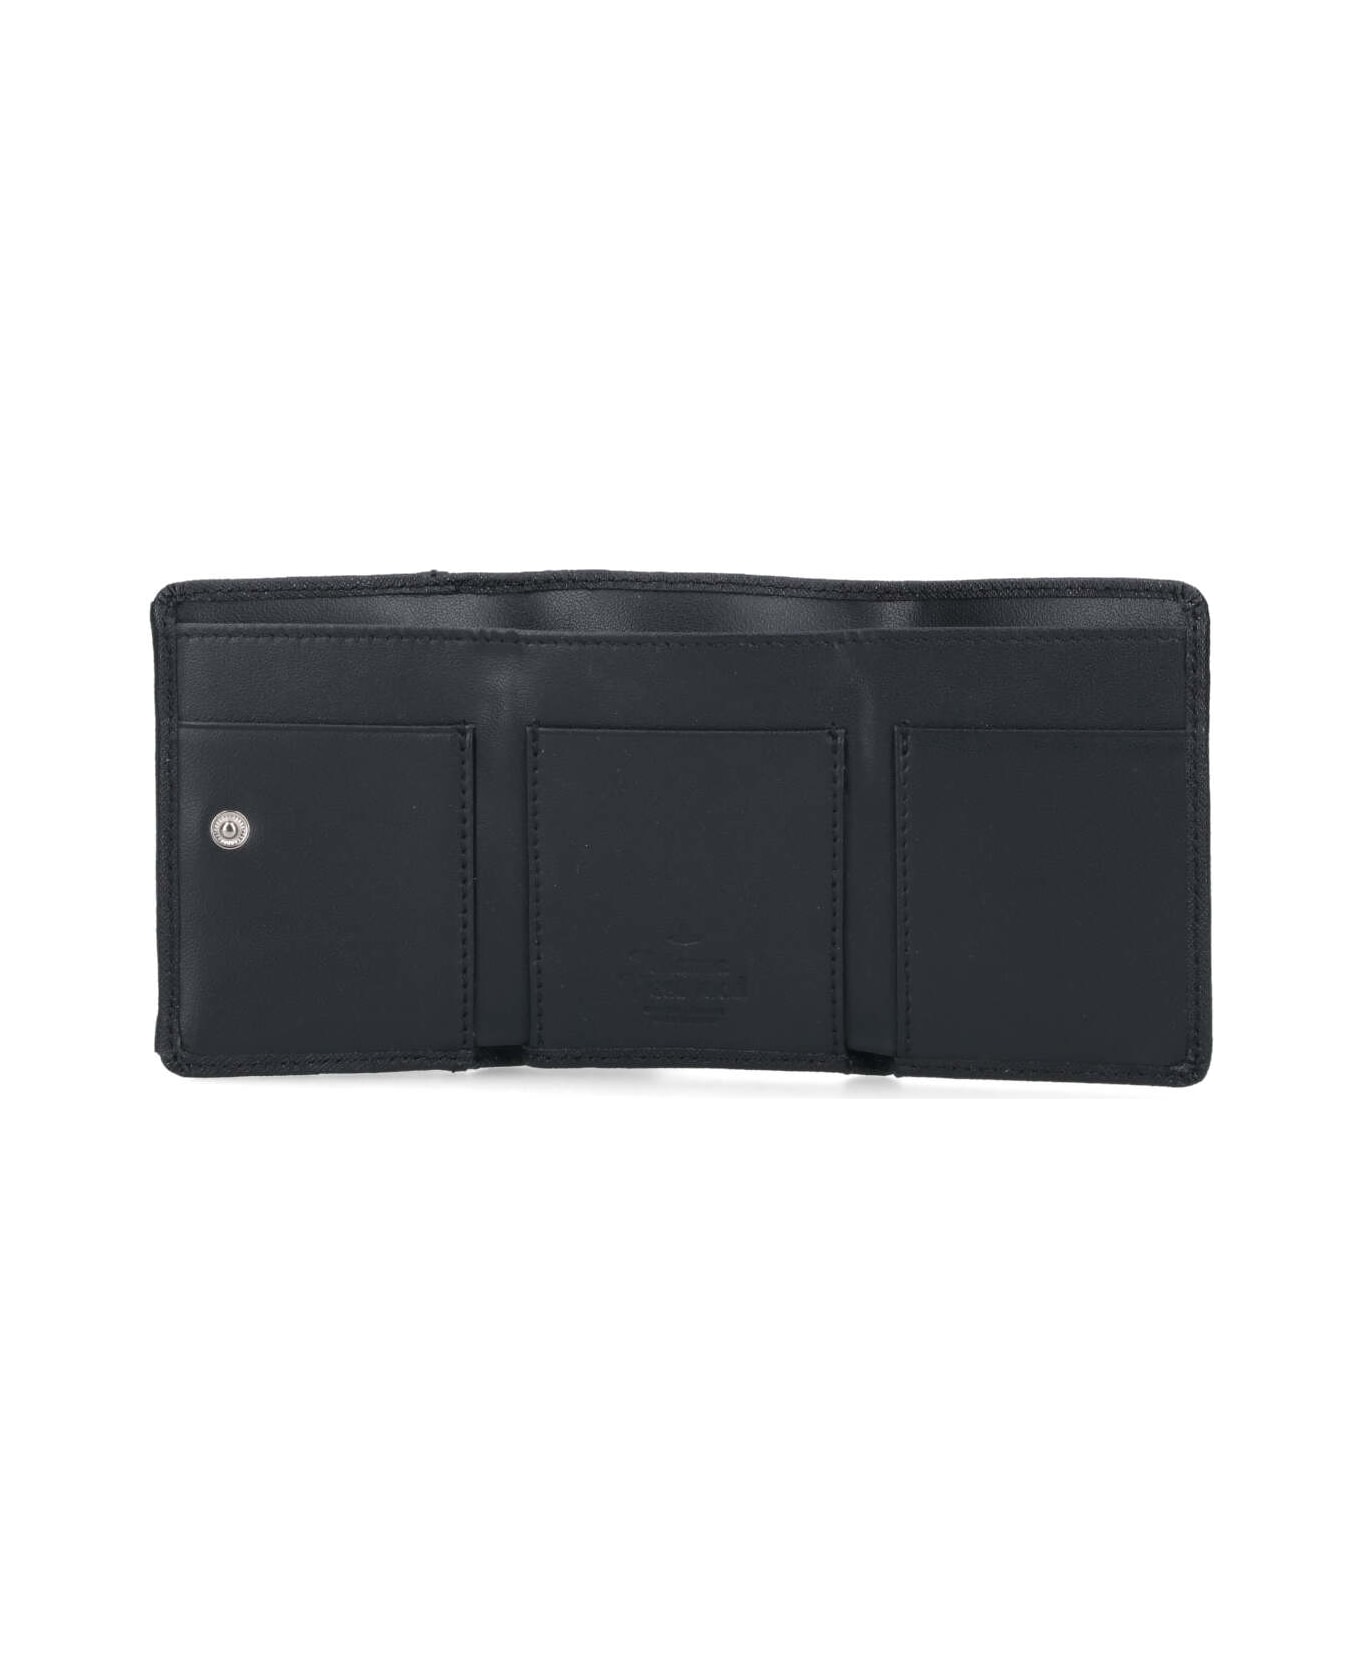 Vivienne Westwood Logo Flap Wallet - Black   財布